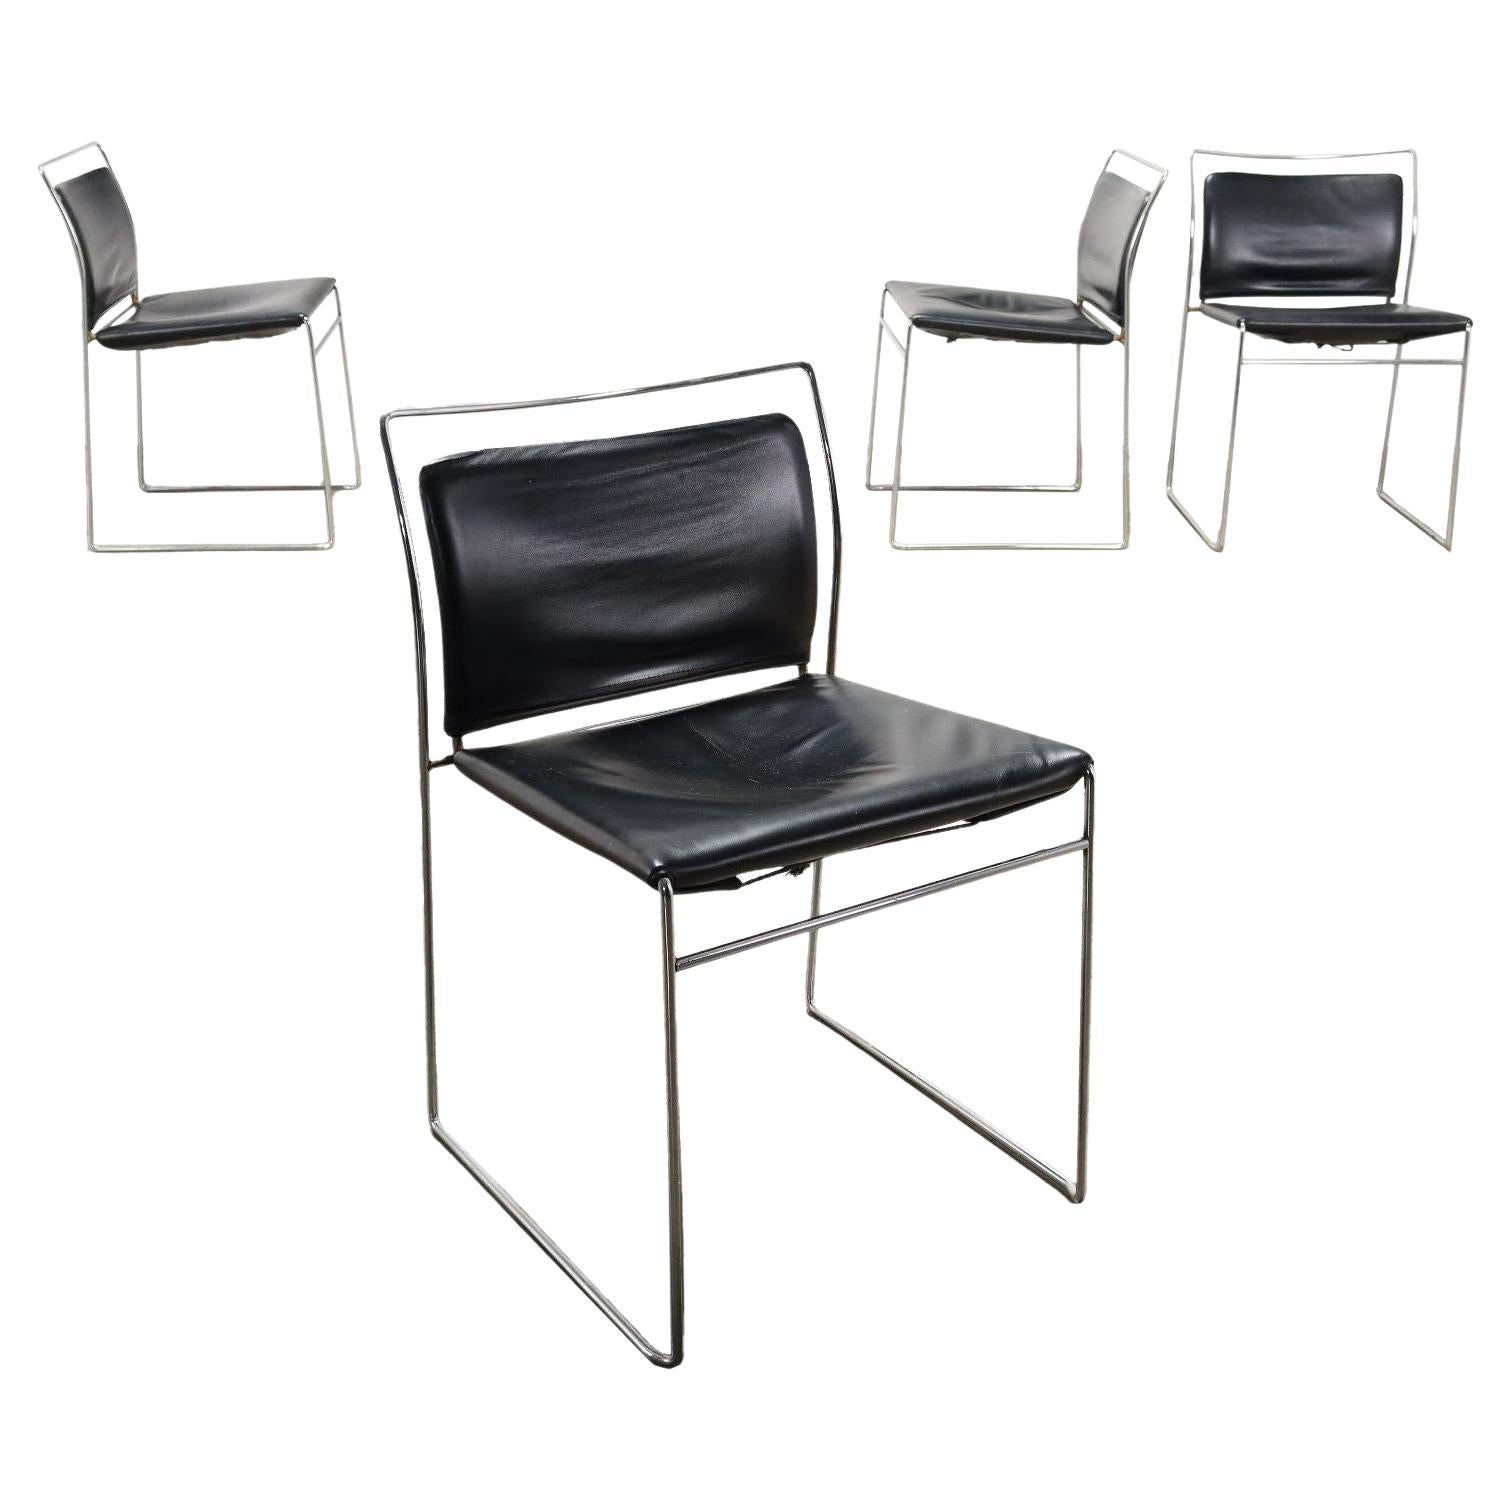 Group of 4 Chairs Simon Gavina Tulu Leather, Italy, 1960s-1970s